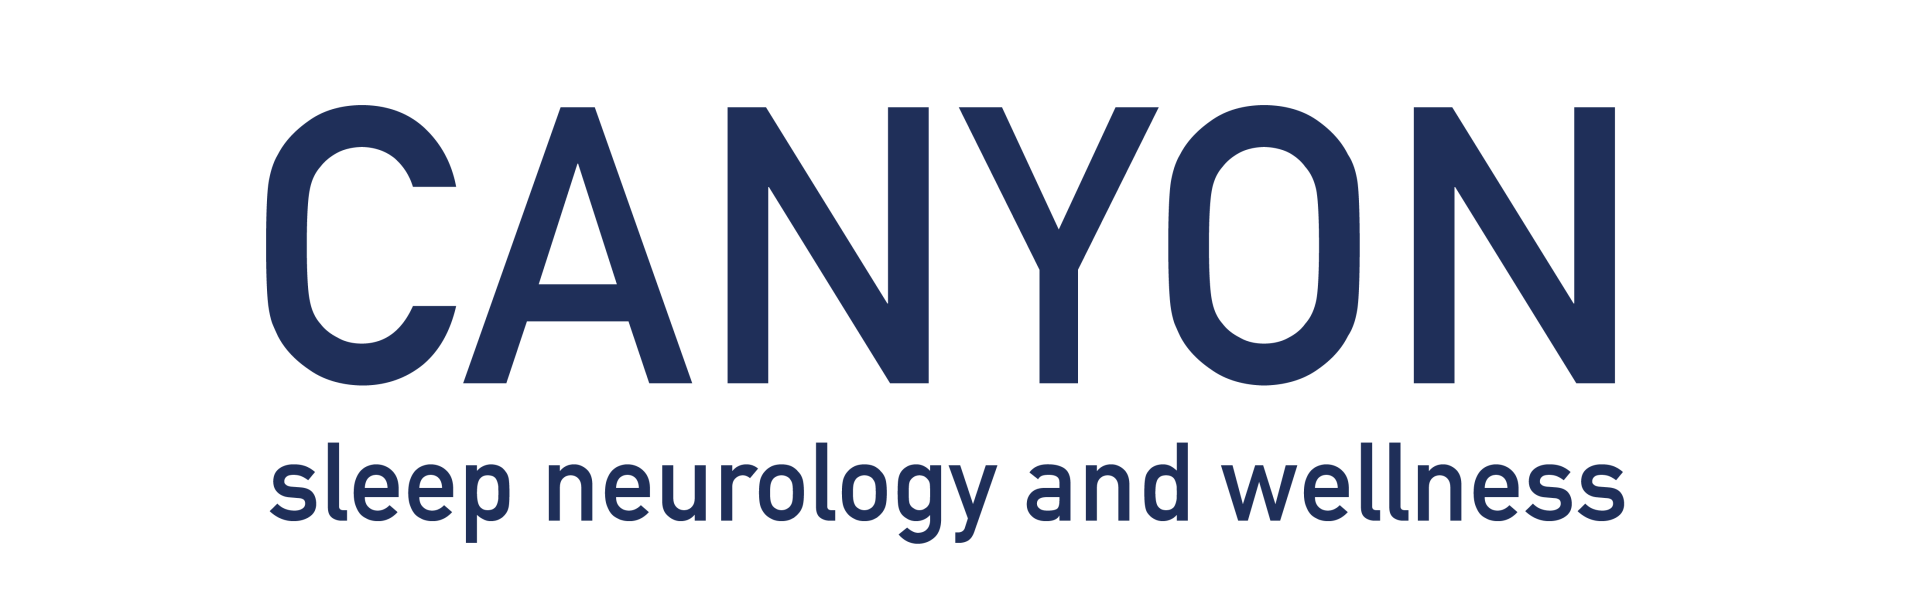 Dr. Troester Canyon Sleep Neurology and Wellness